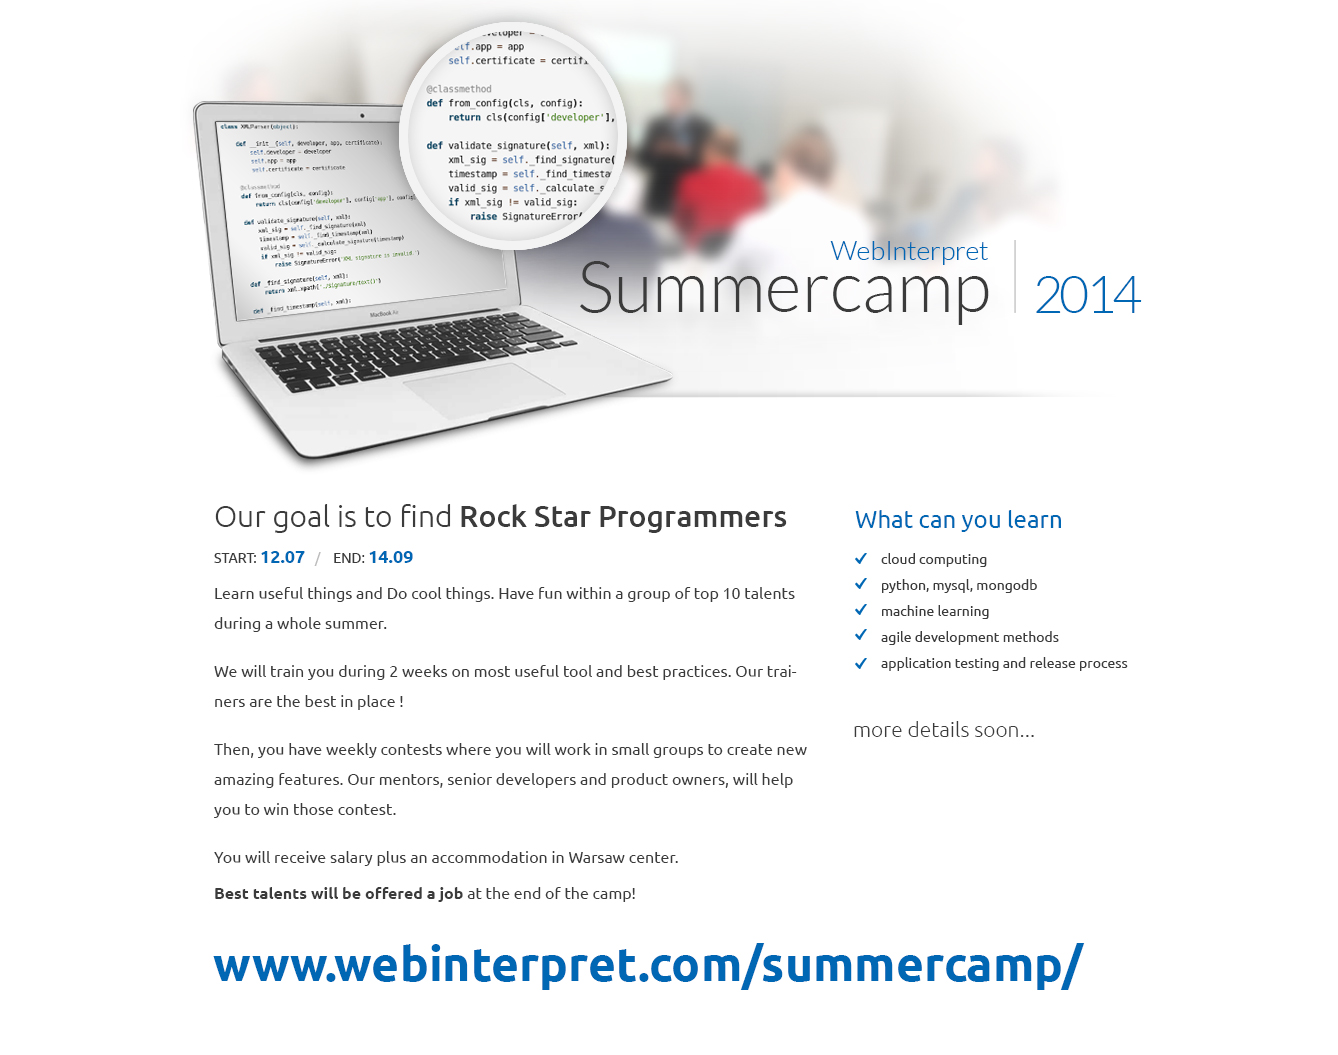 _images/summercamp.jpg